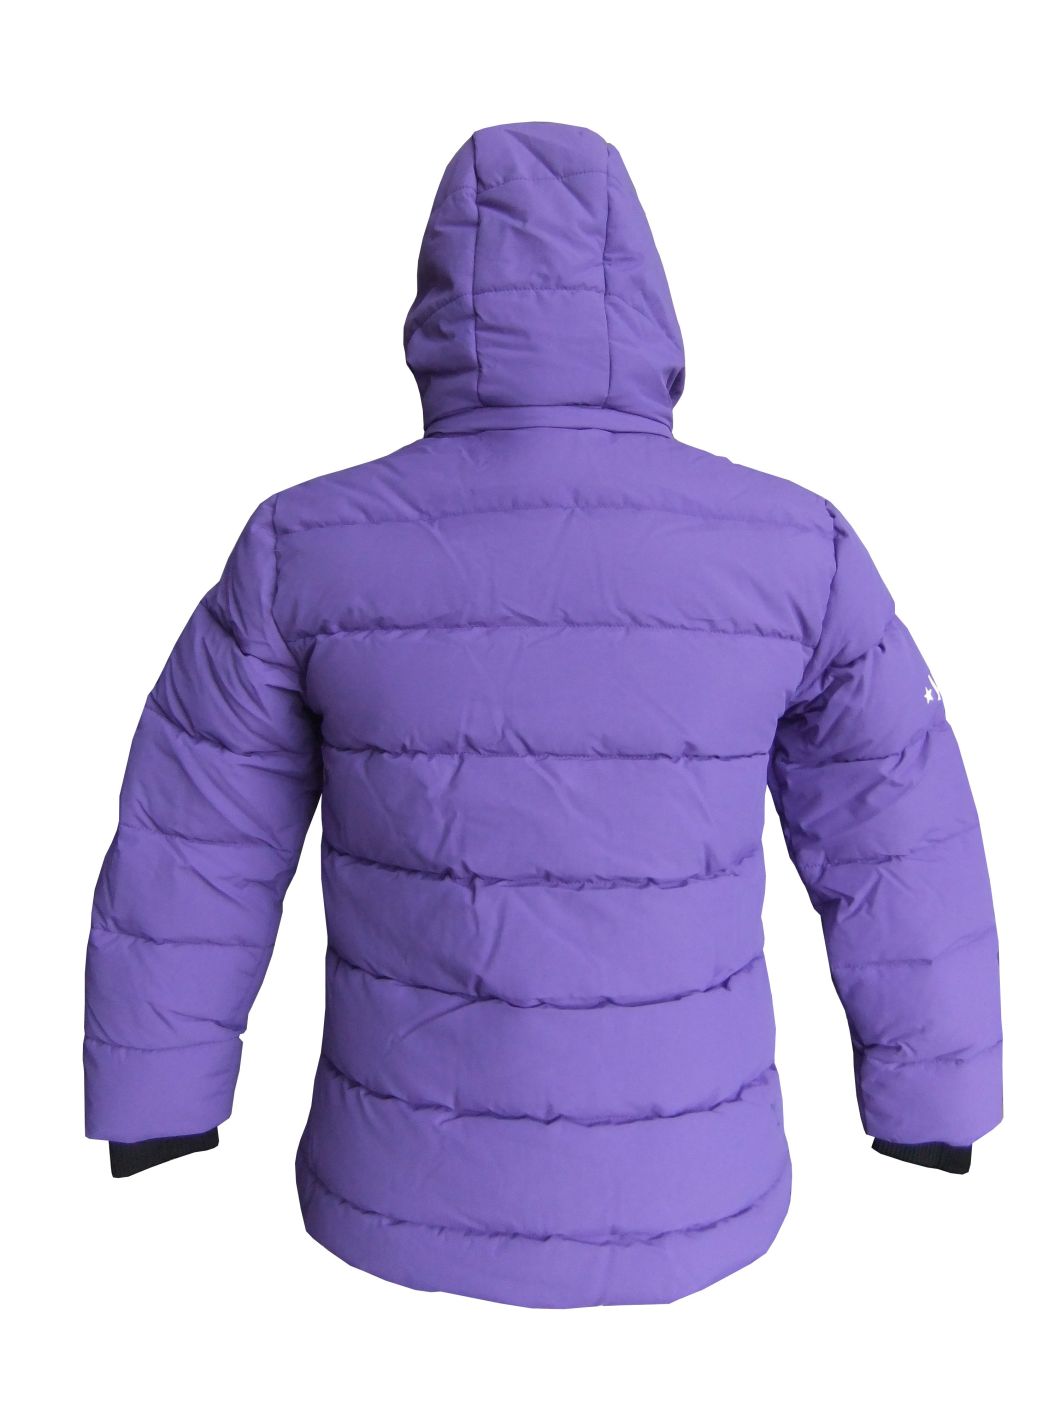 Awọn ọmọ wẹwẹ isalẹ Hoodie Puffer Jakẹti Padded School Coat Quilted Warm Filling Winter Casual Hooded Wholesale OEM